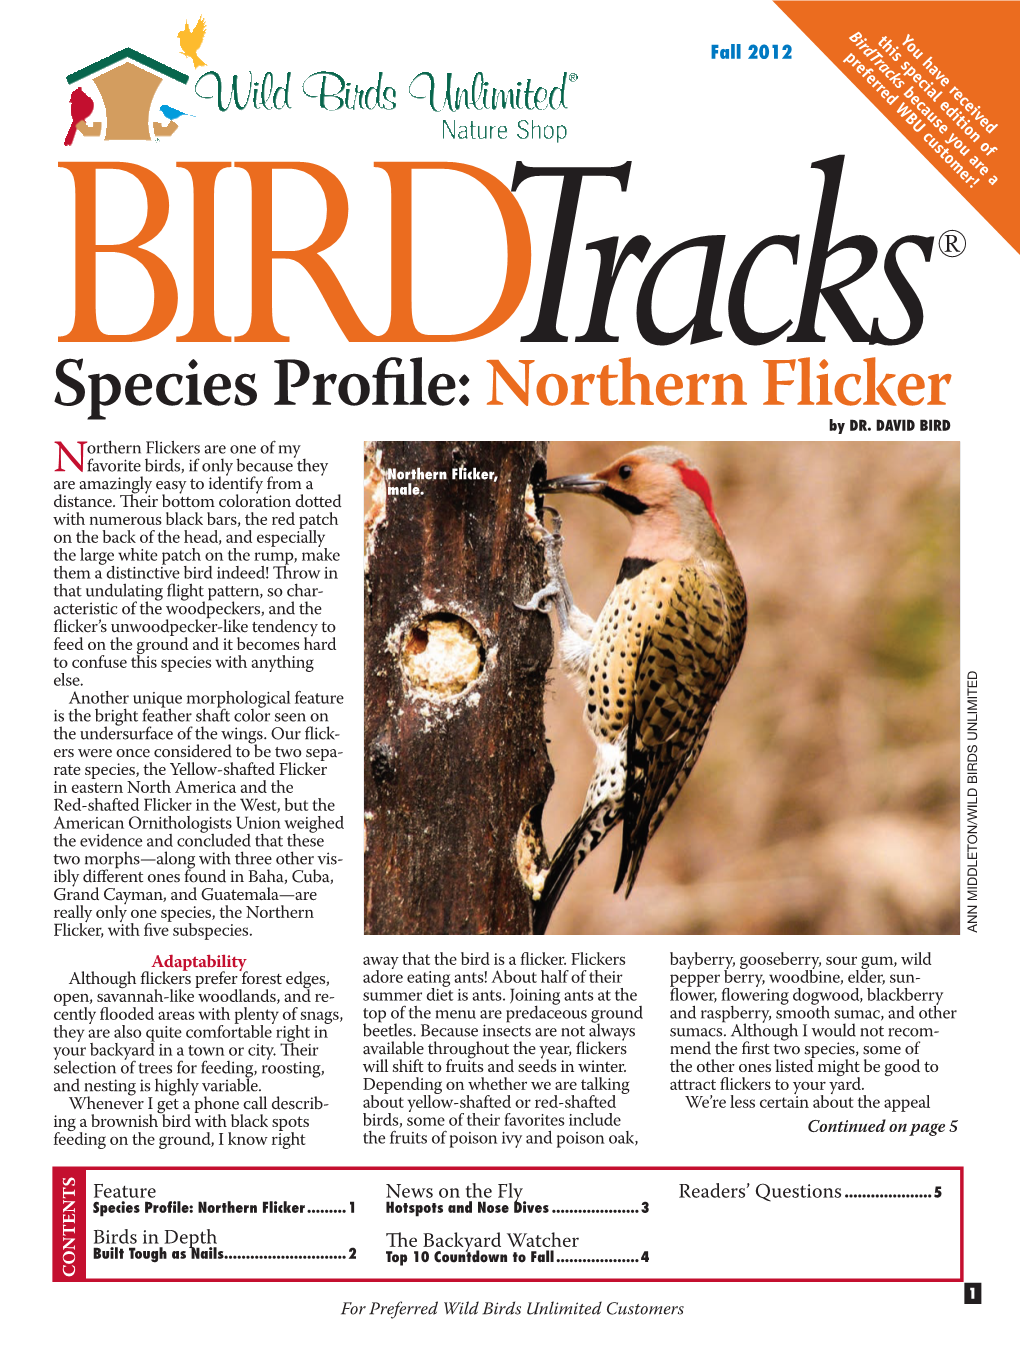 Species Profile:Northern Flicker